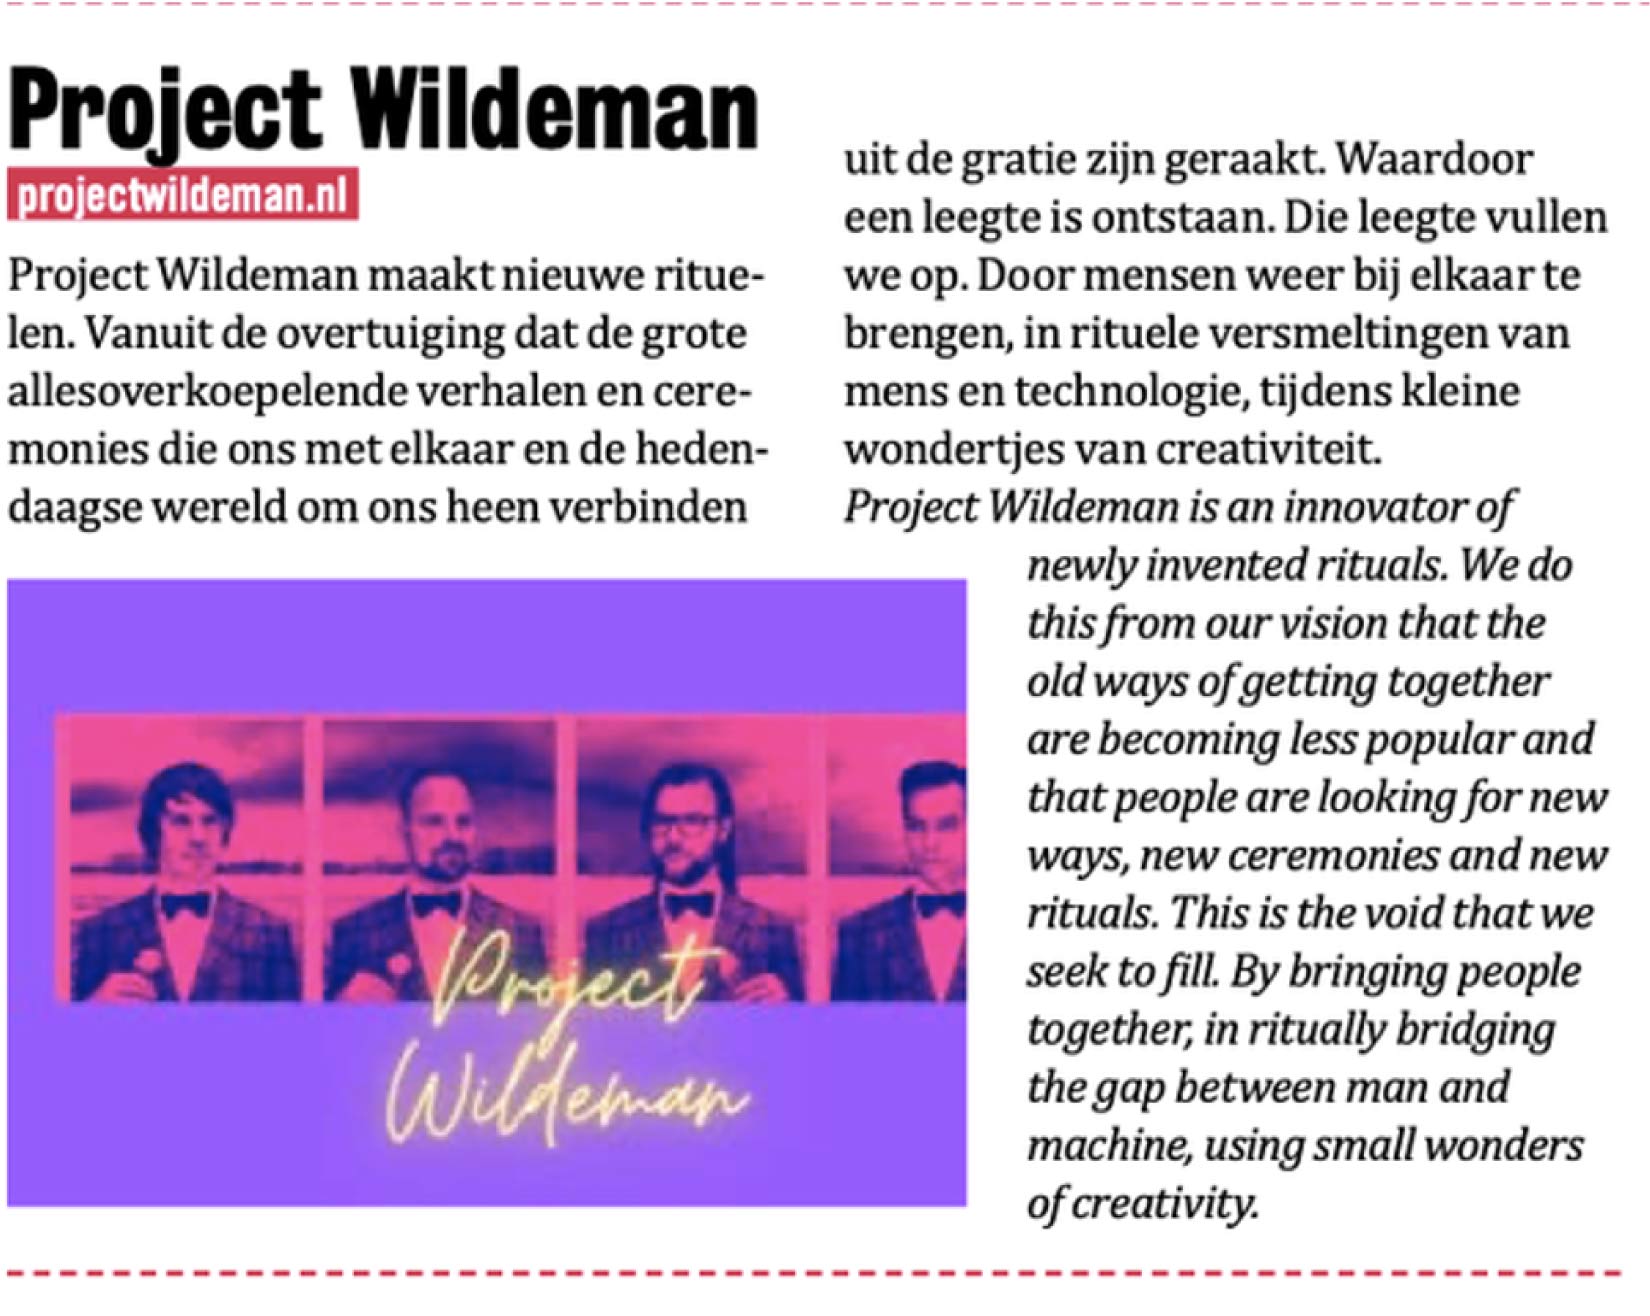 Project Wildeman in Strtfstvl gids